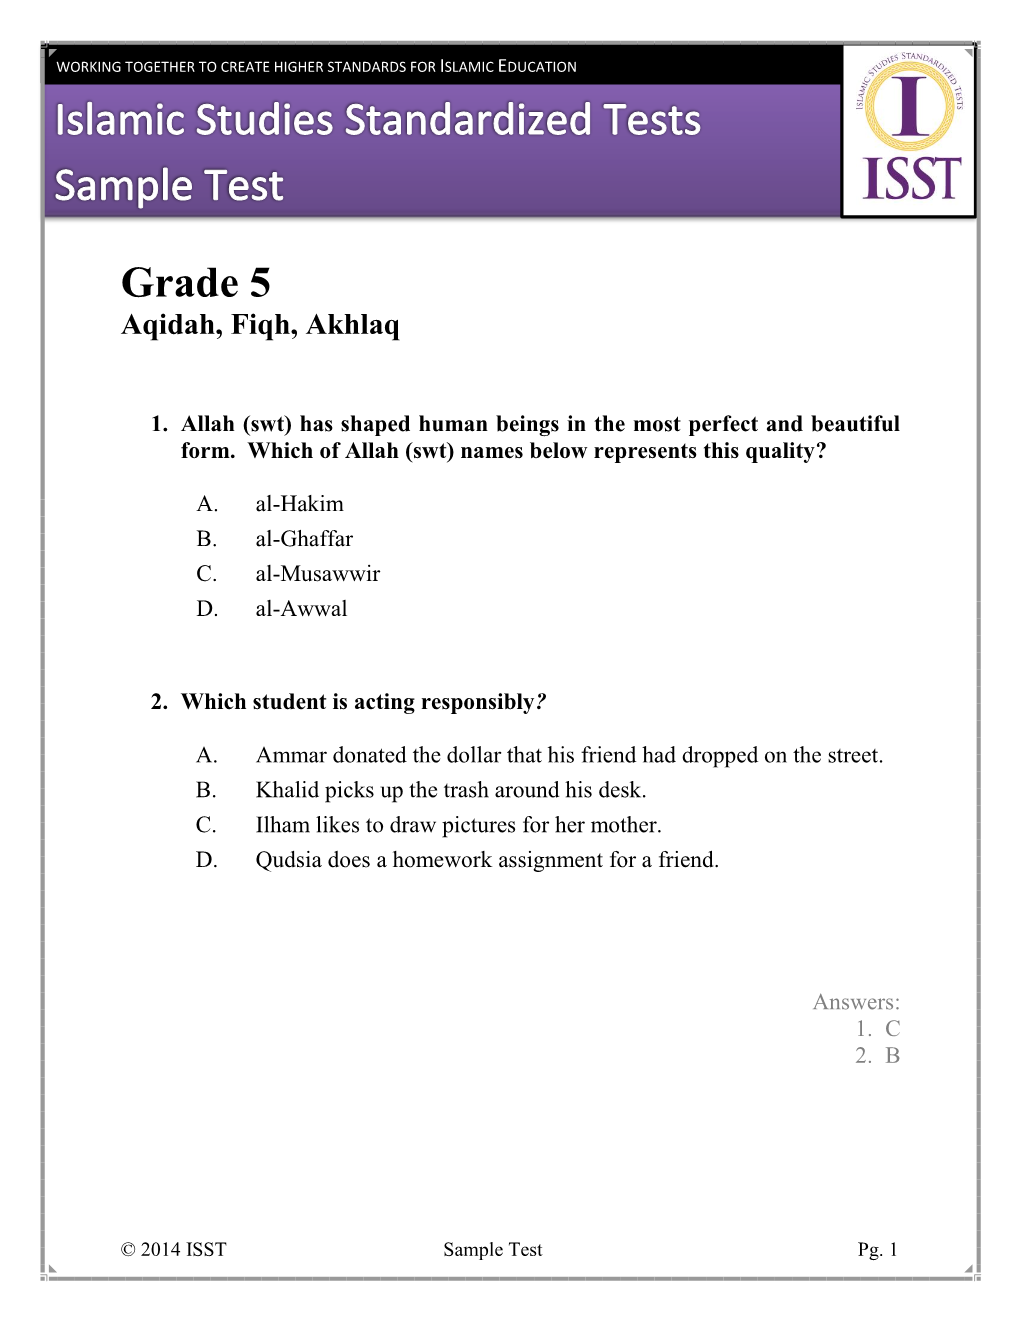 Print Grade 5 Sample Test